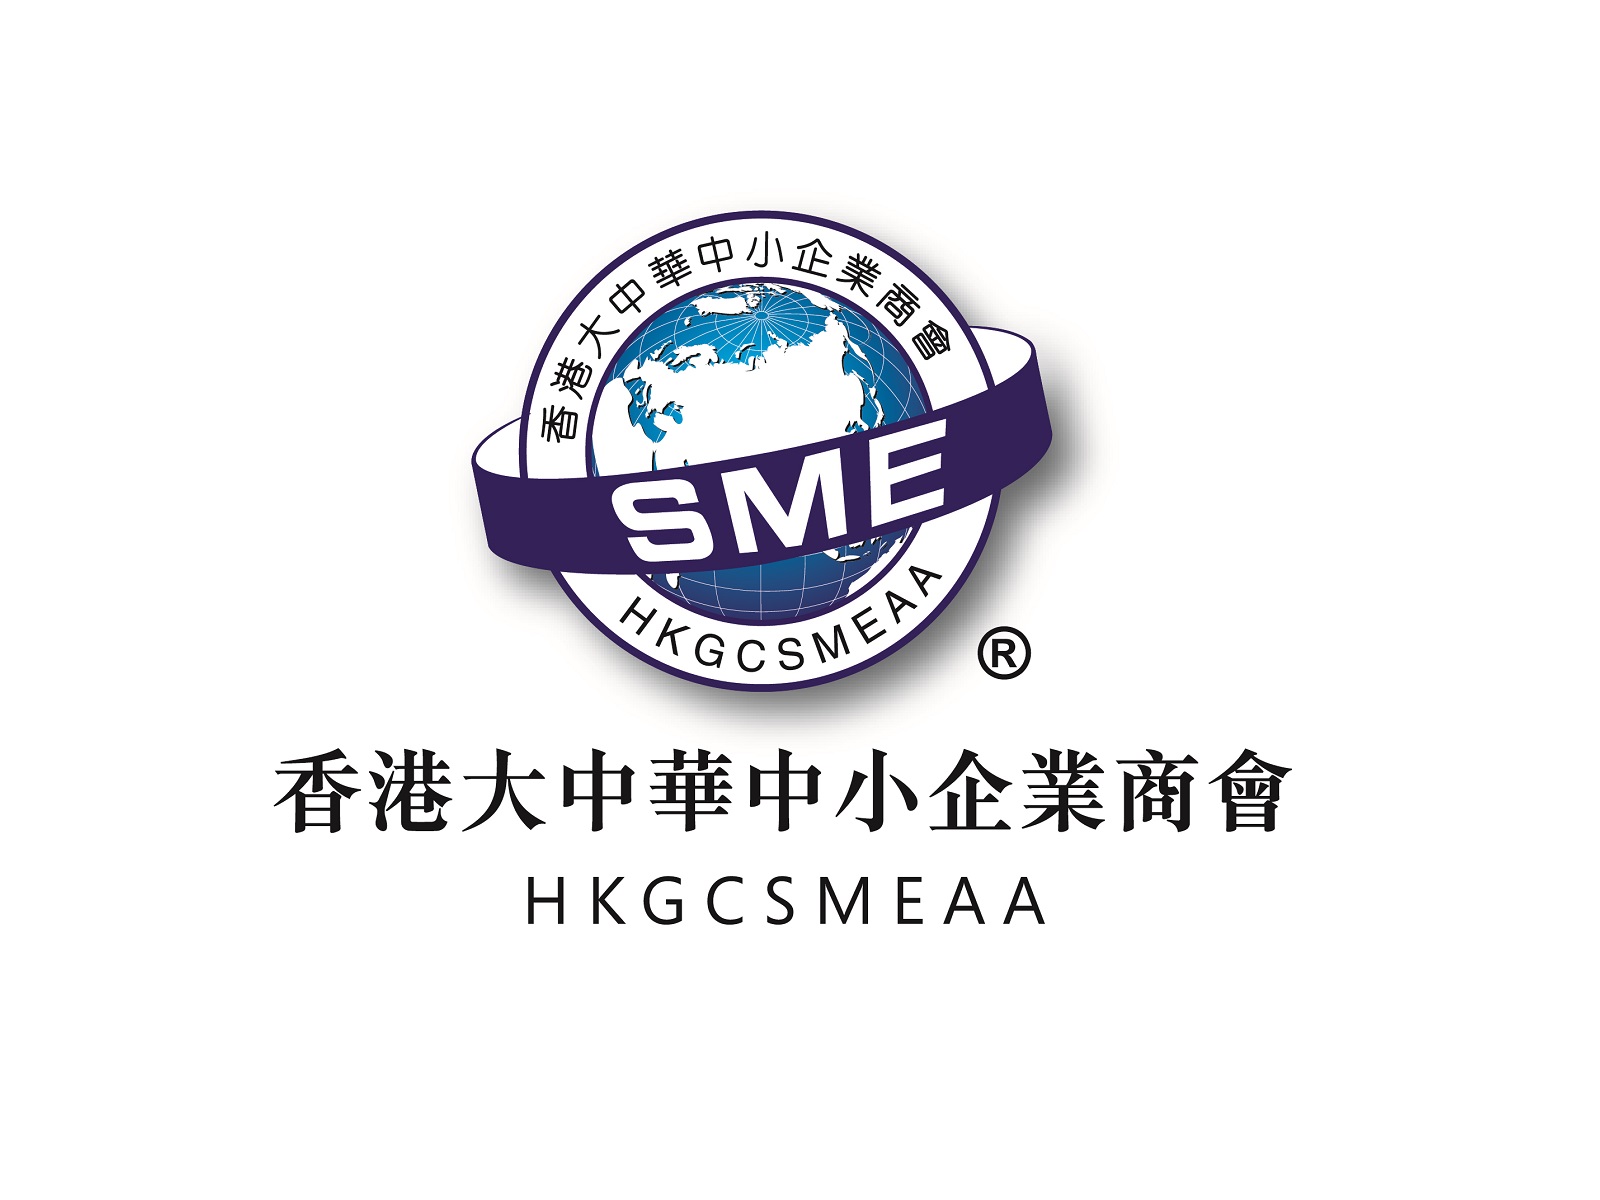 Hong Kong Greater China SME Alliance Association